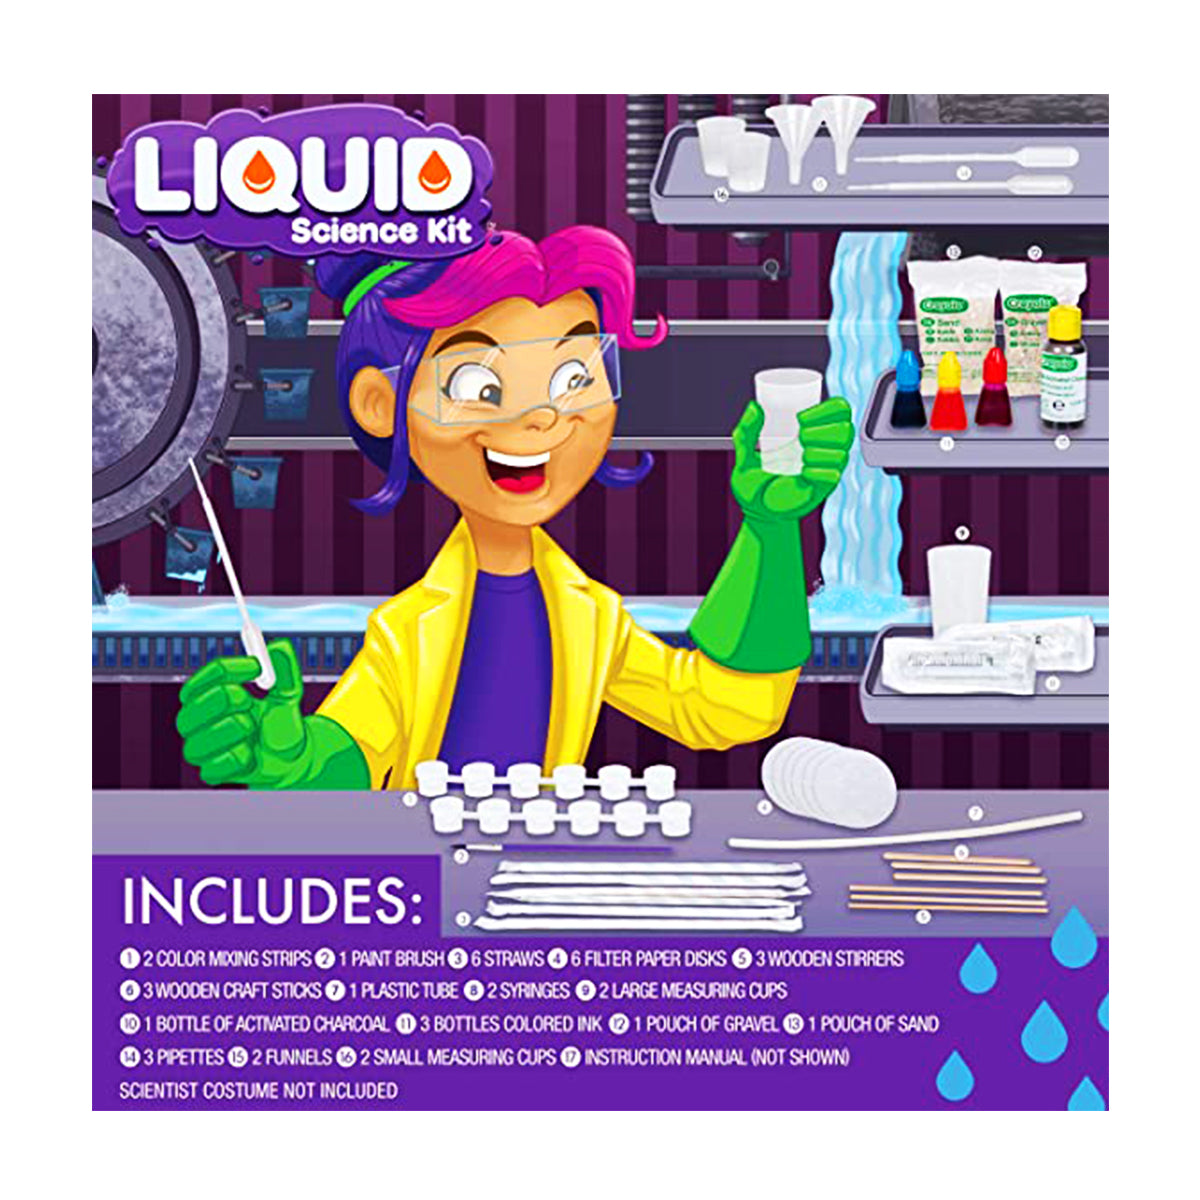 Crayola - Steam Liquid Lab Kit